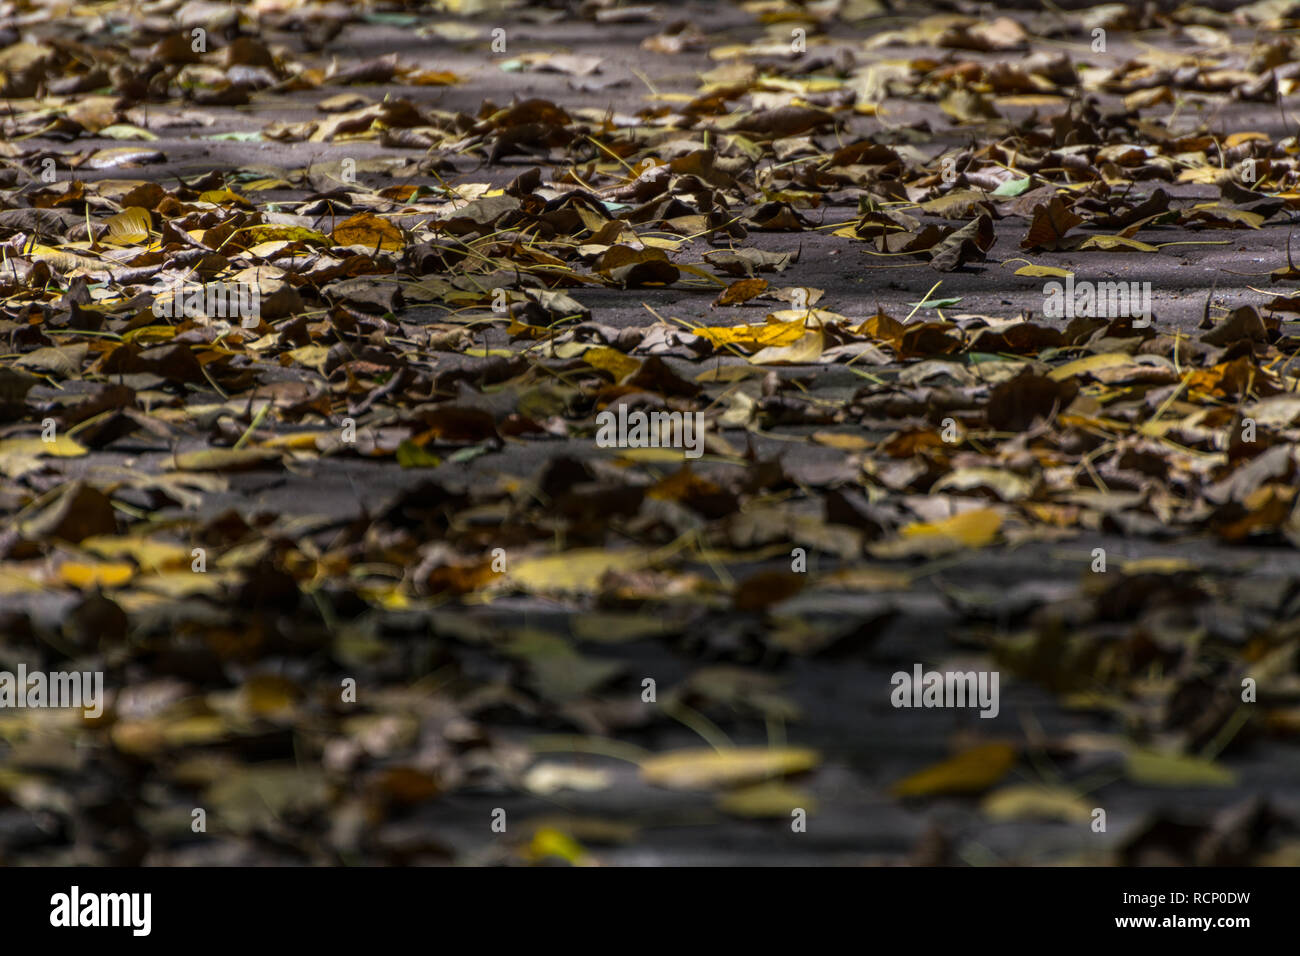 2019, january. Rio de Janeiro, Brazil. Dry yellow leaves on the floor. Stock Photo